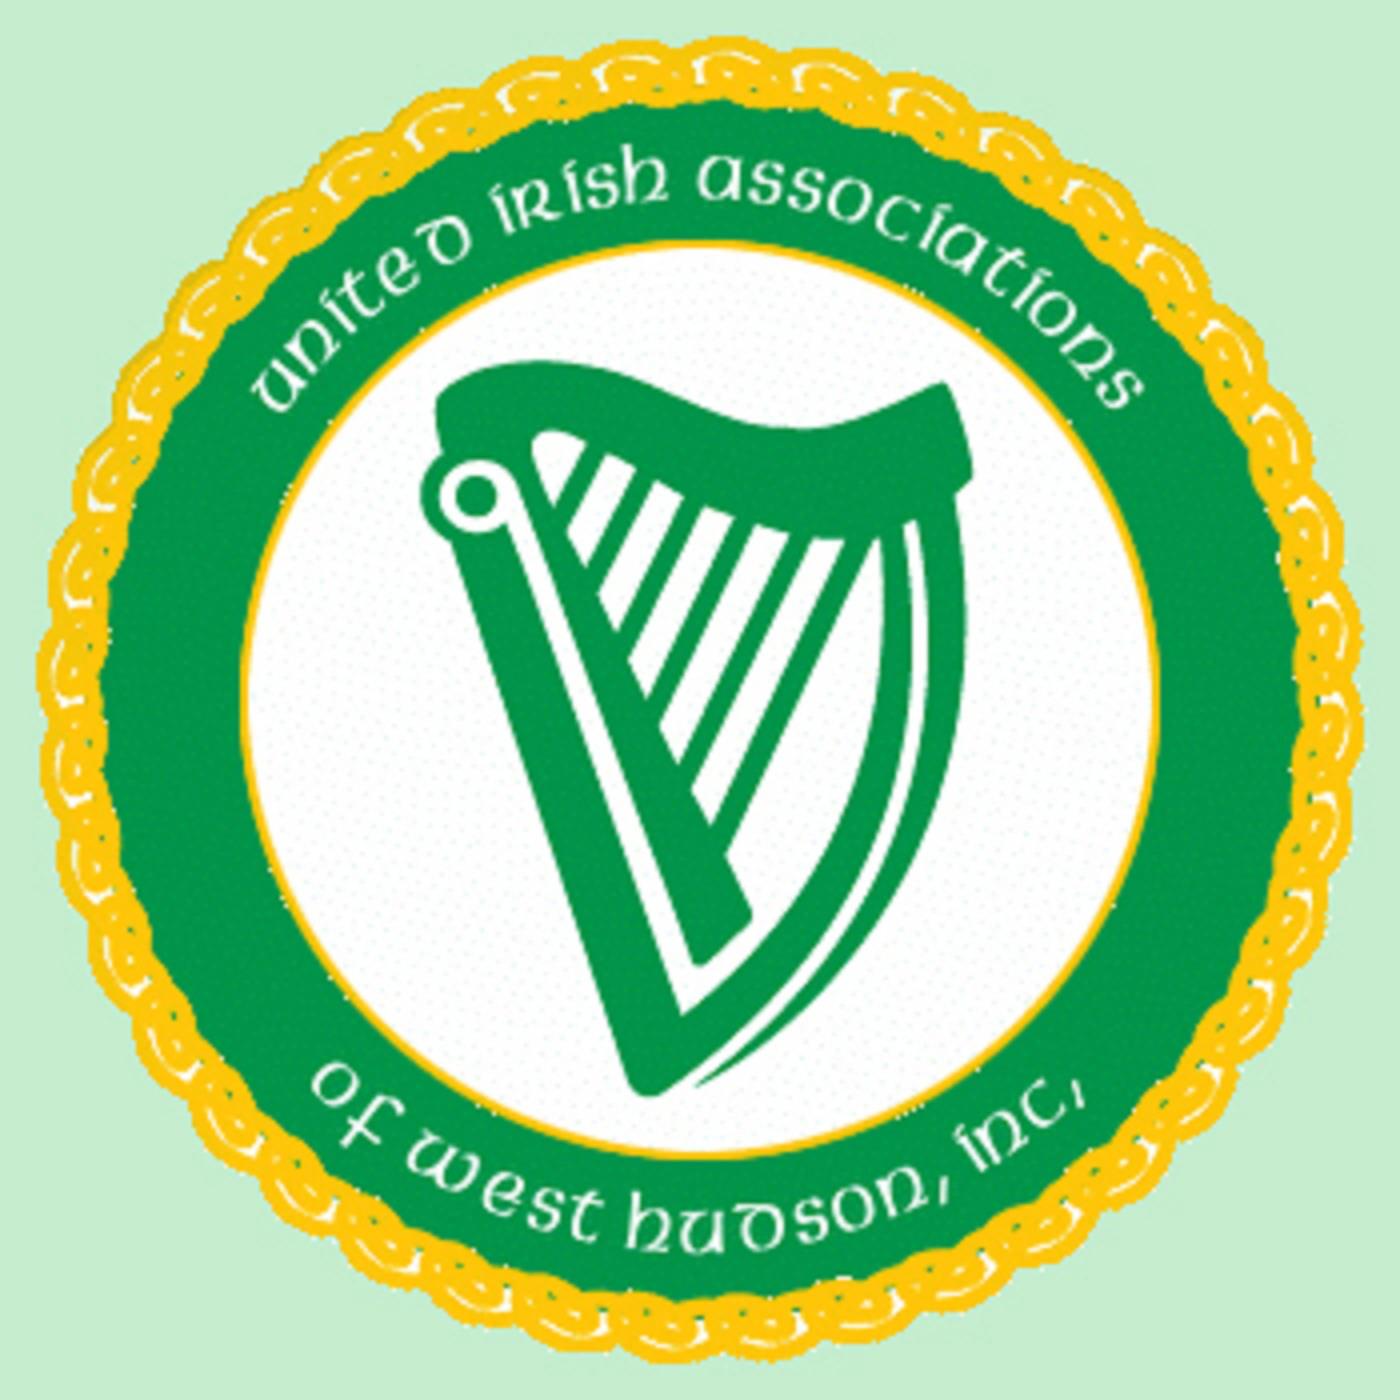 Gaelic Speaking Organizations in USA - The United Irish Associations of West Hudson, Inc.